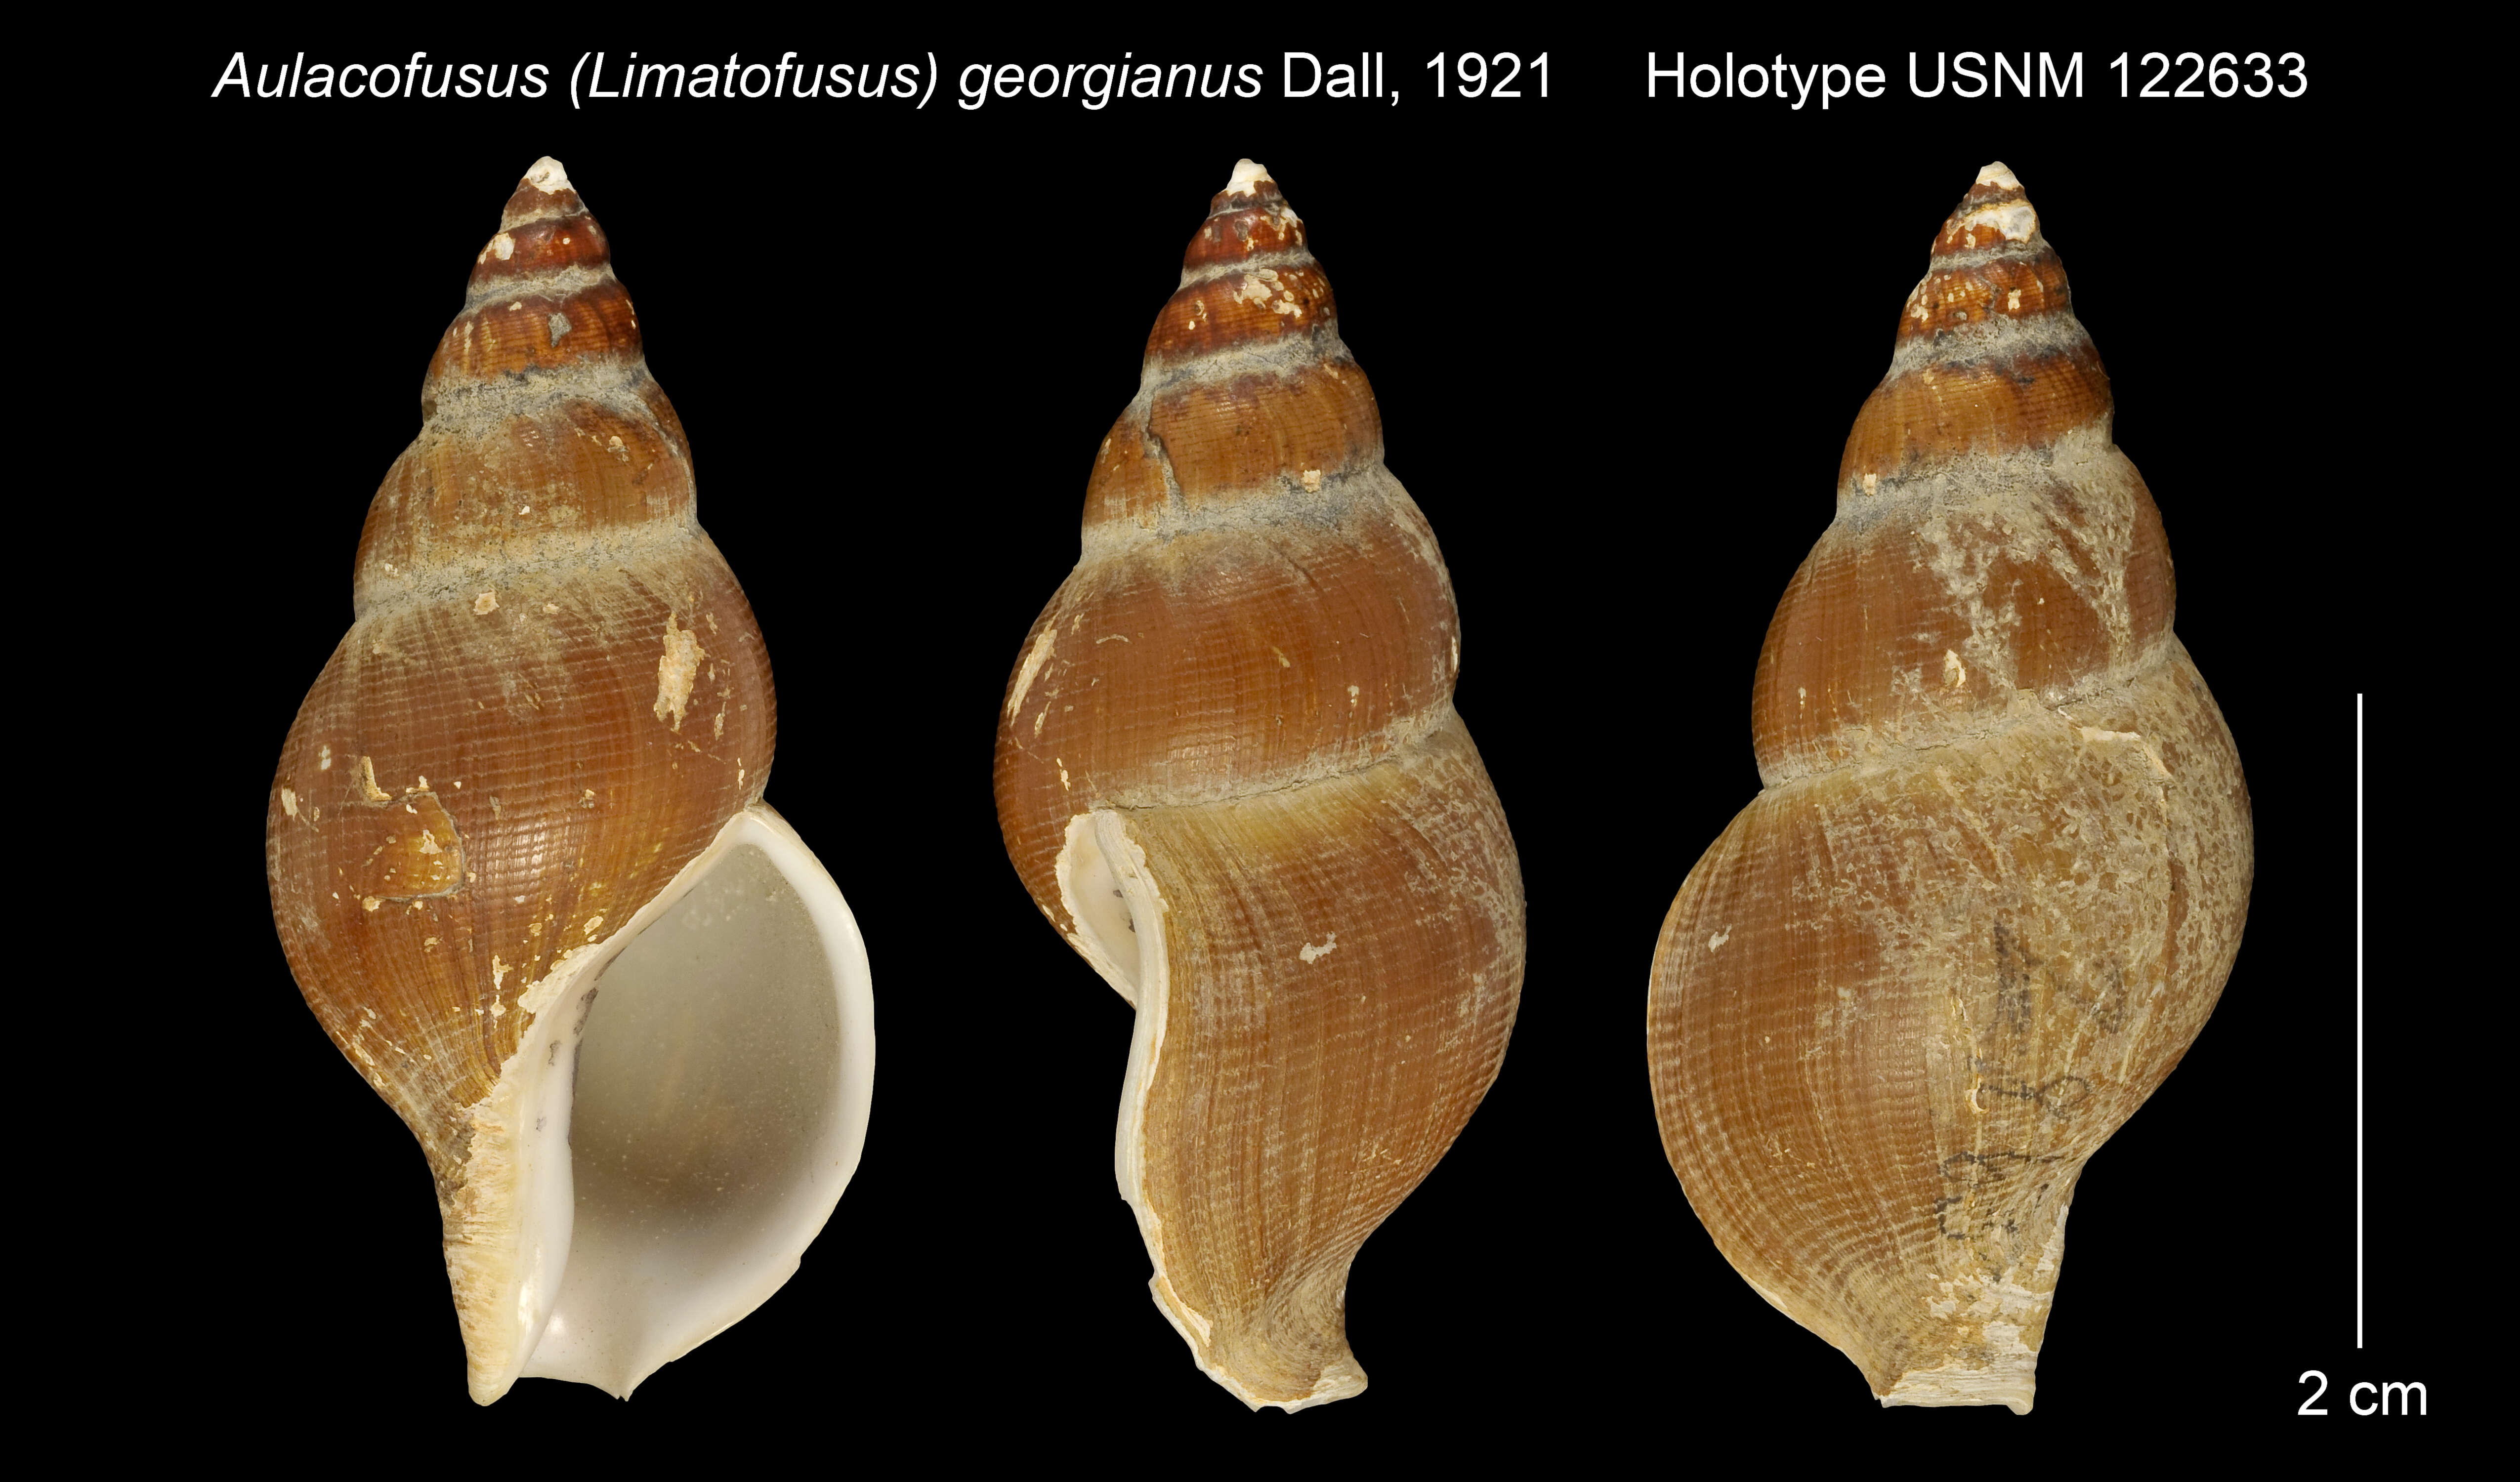 Image of Aulacofusus (Limatofusus) georgianus Dall